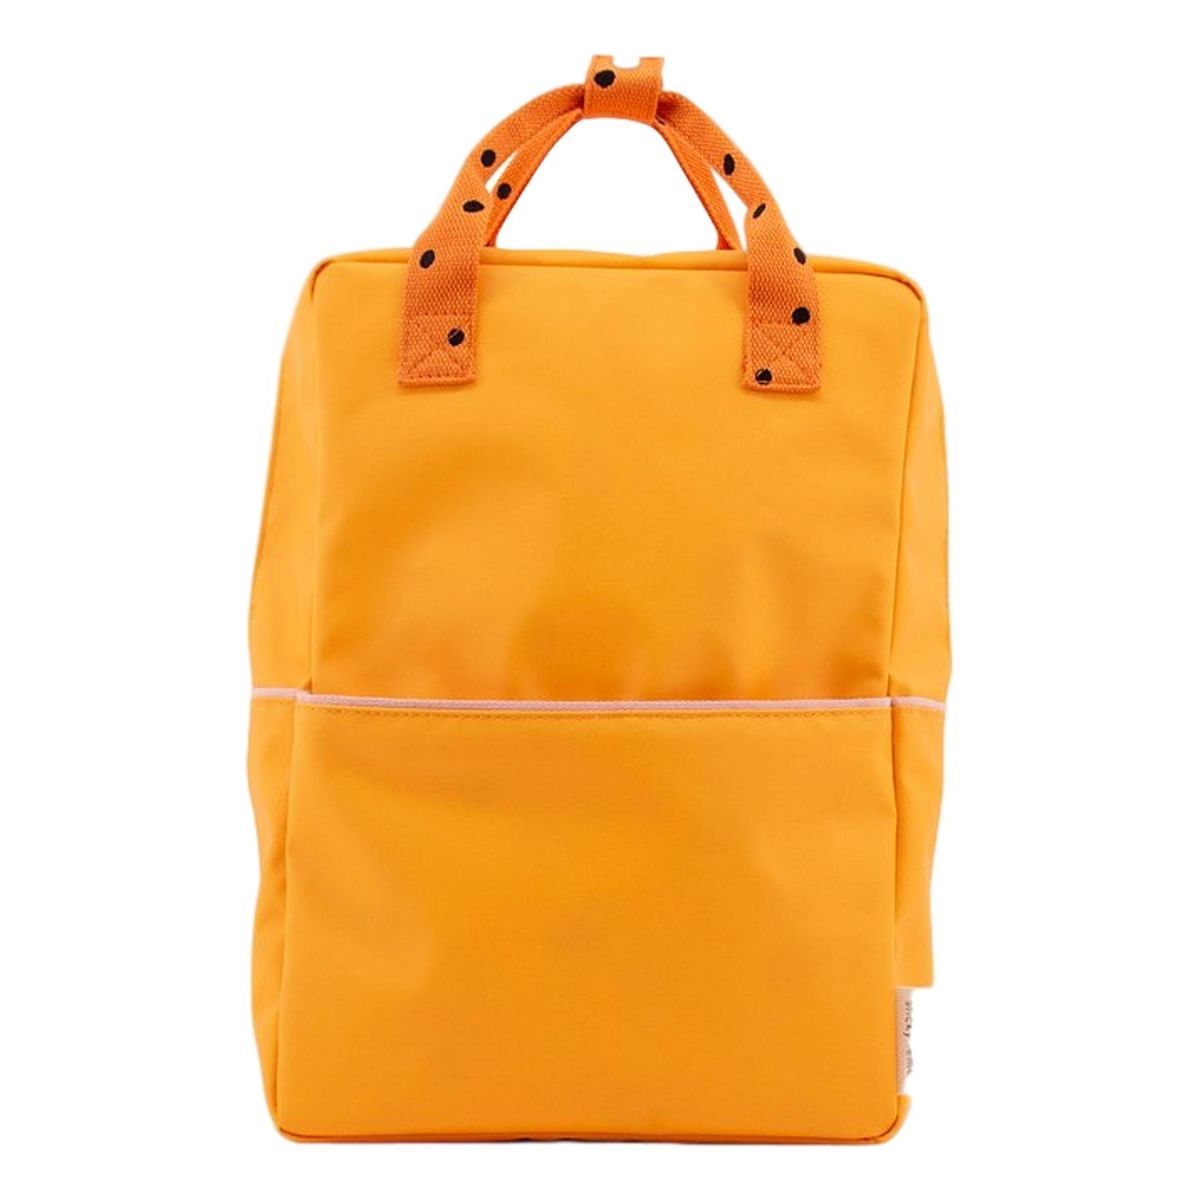 Sticky Lemon Backpack large / Freckles Sunny yellow 배낭 및 연필 가방